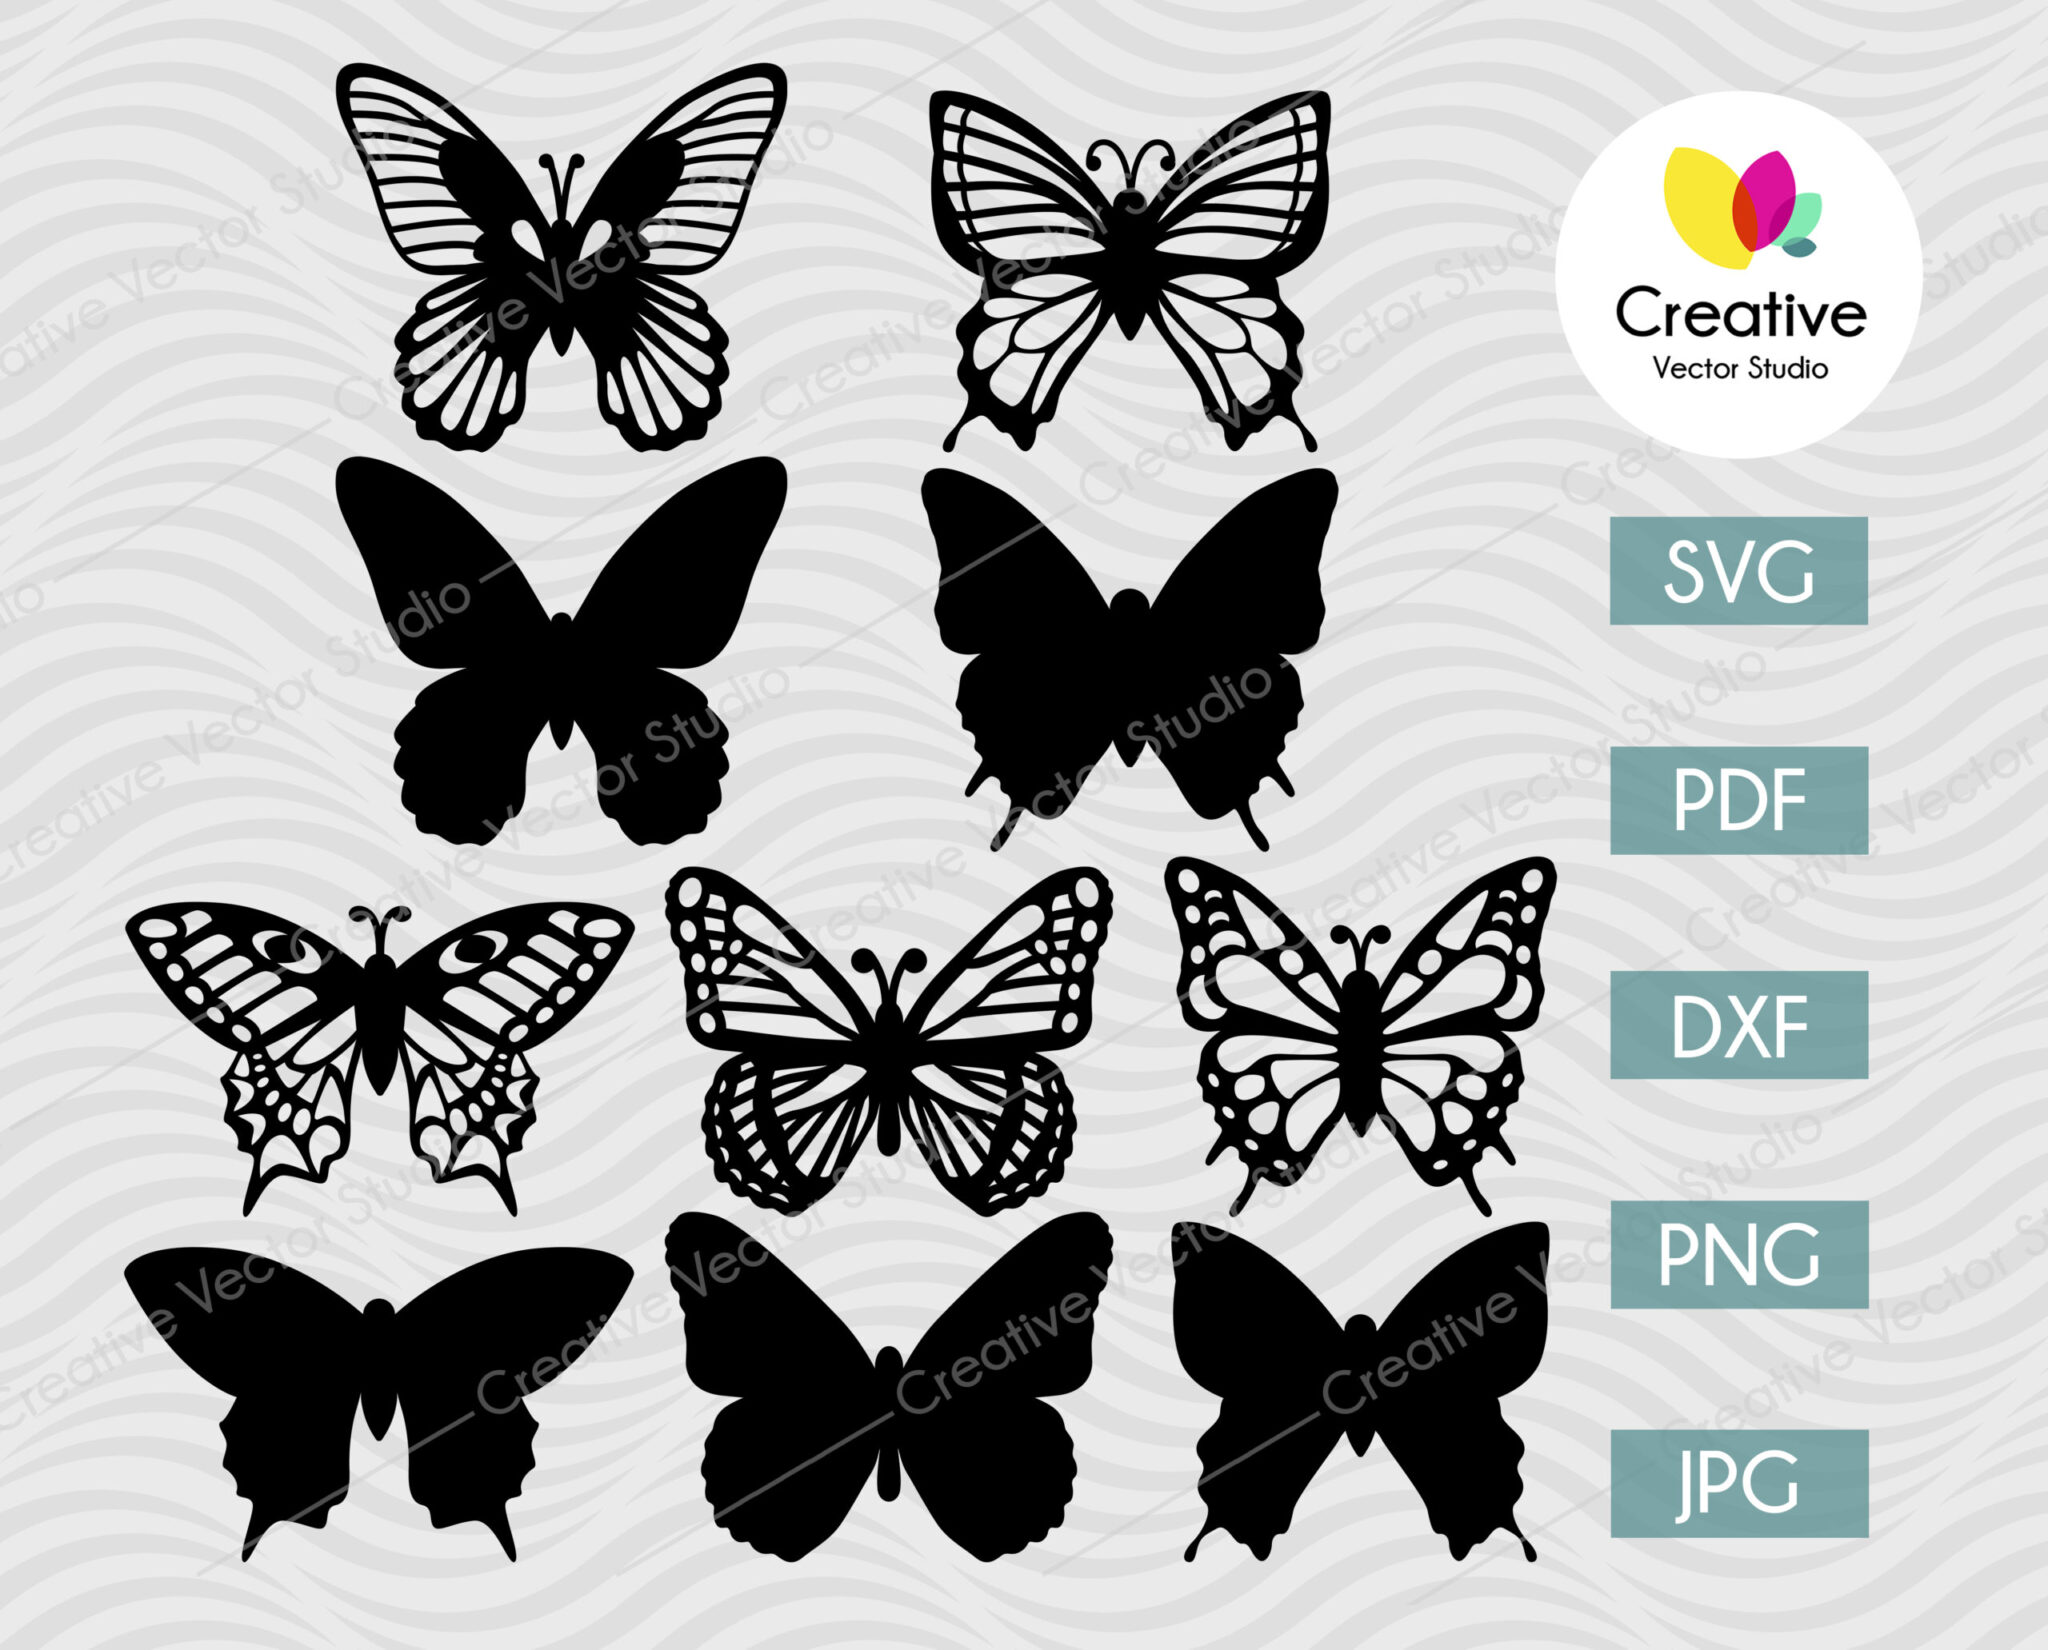 3D Butterfly Cutting Template SVG Bundle - Creative Vector Studio